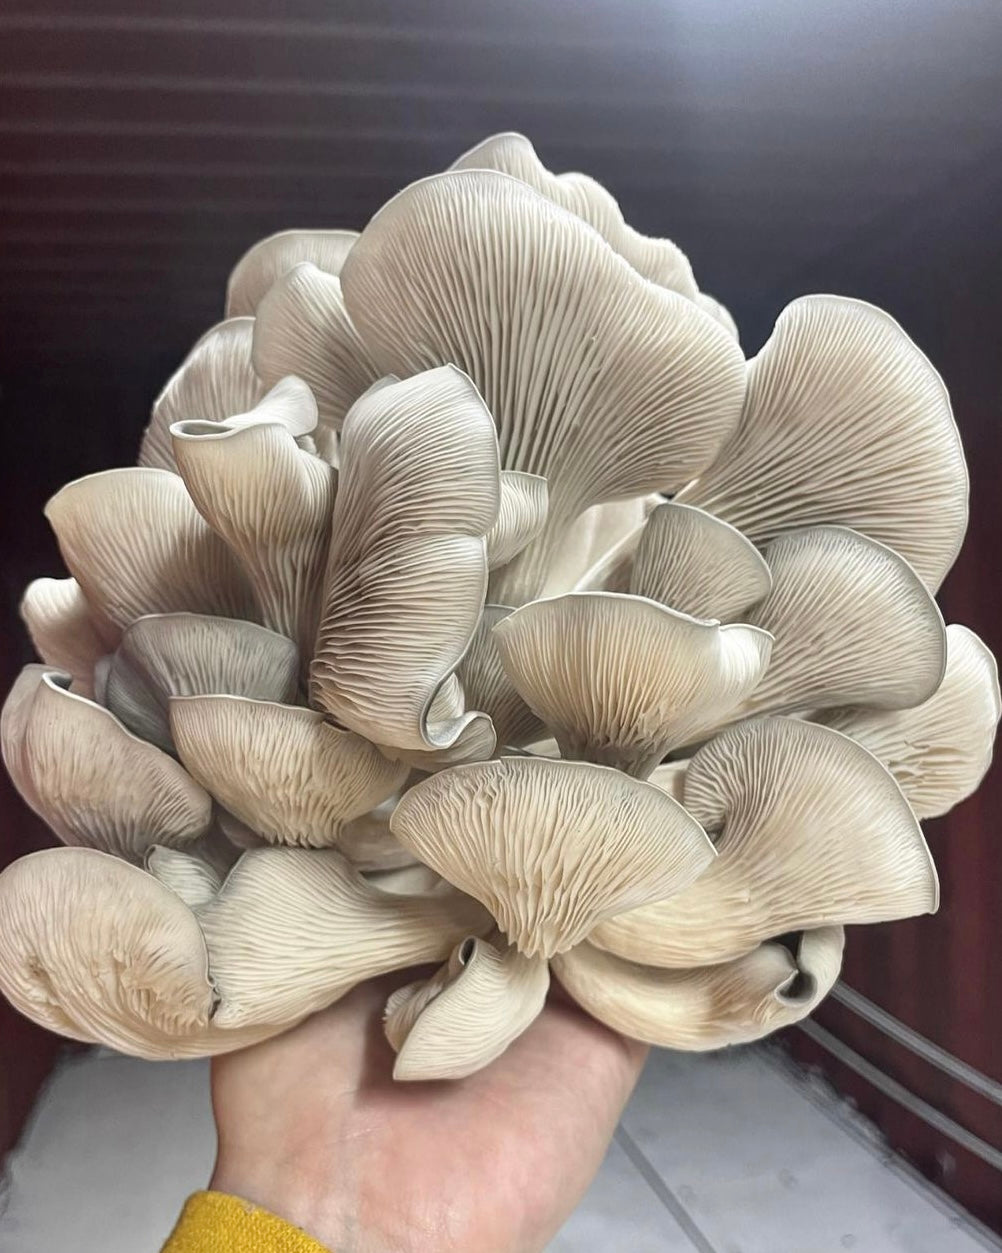 Oyster “Ready-To-Fruit” Mushroom Grow Kit